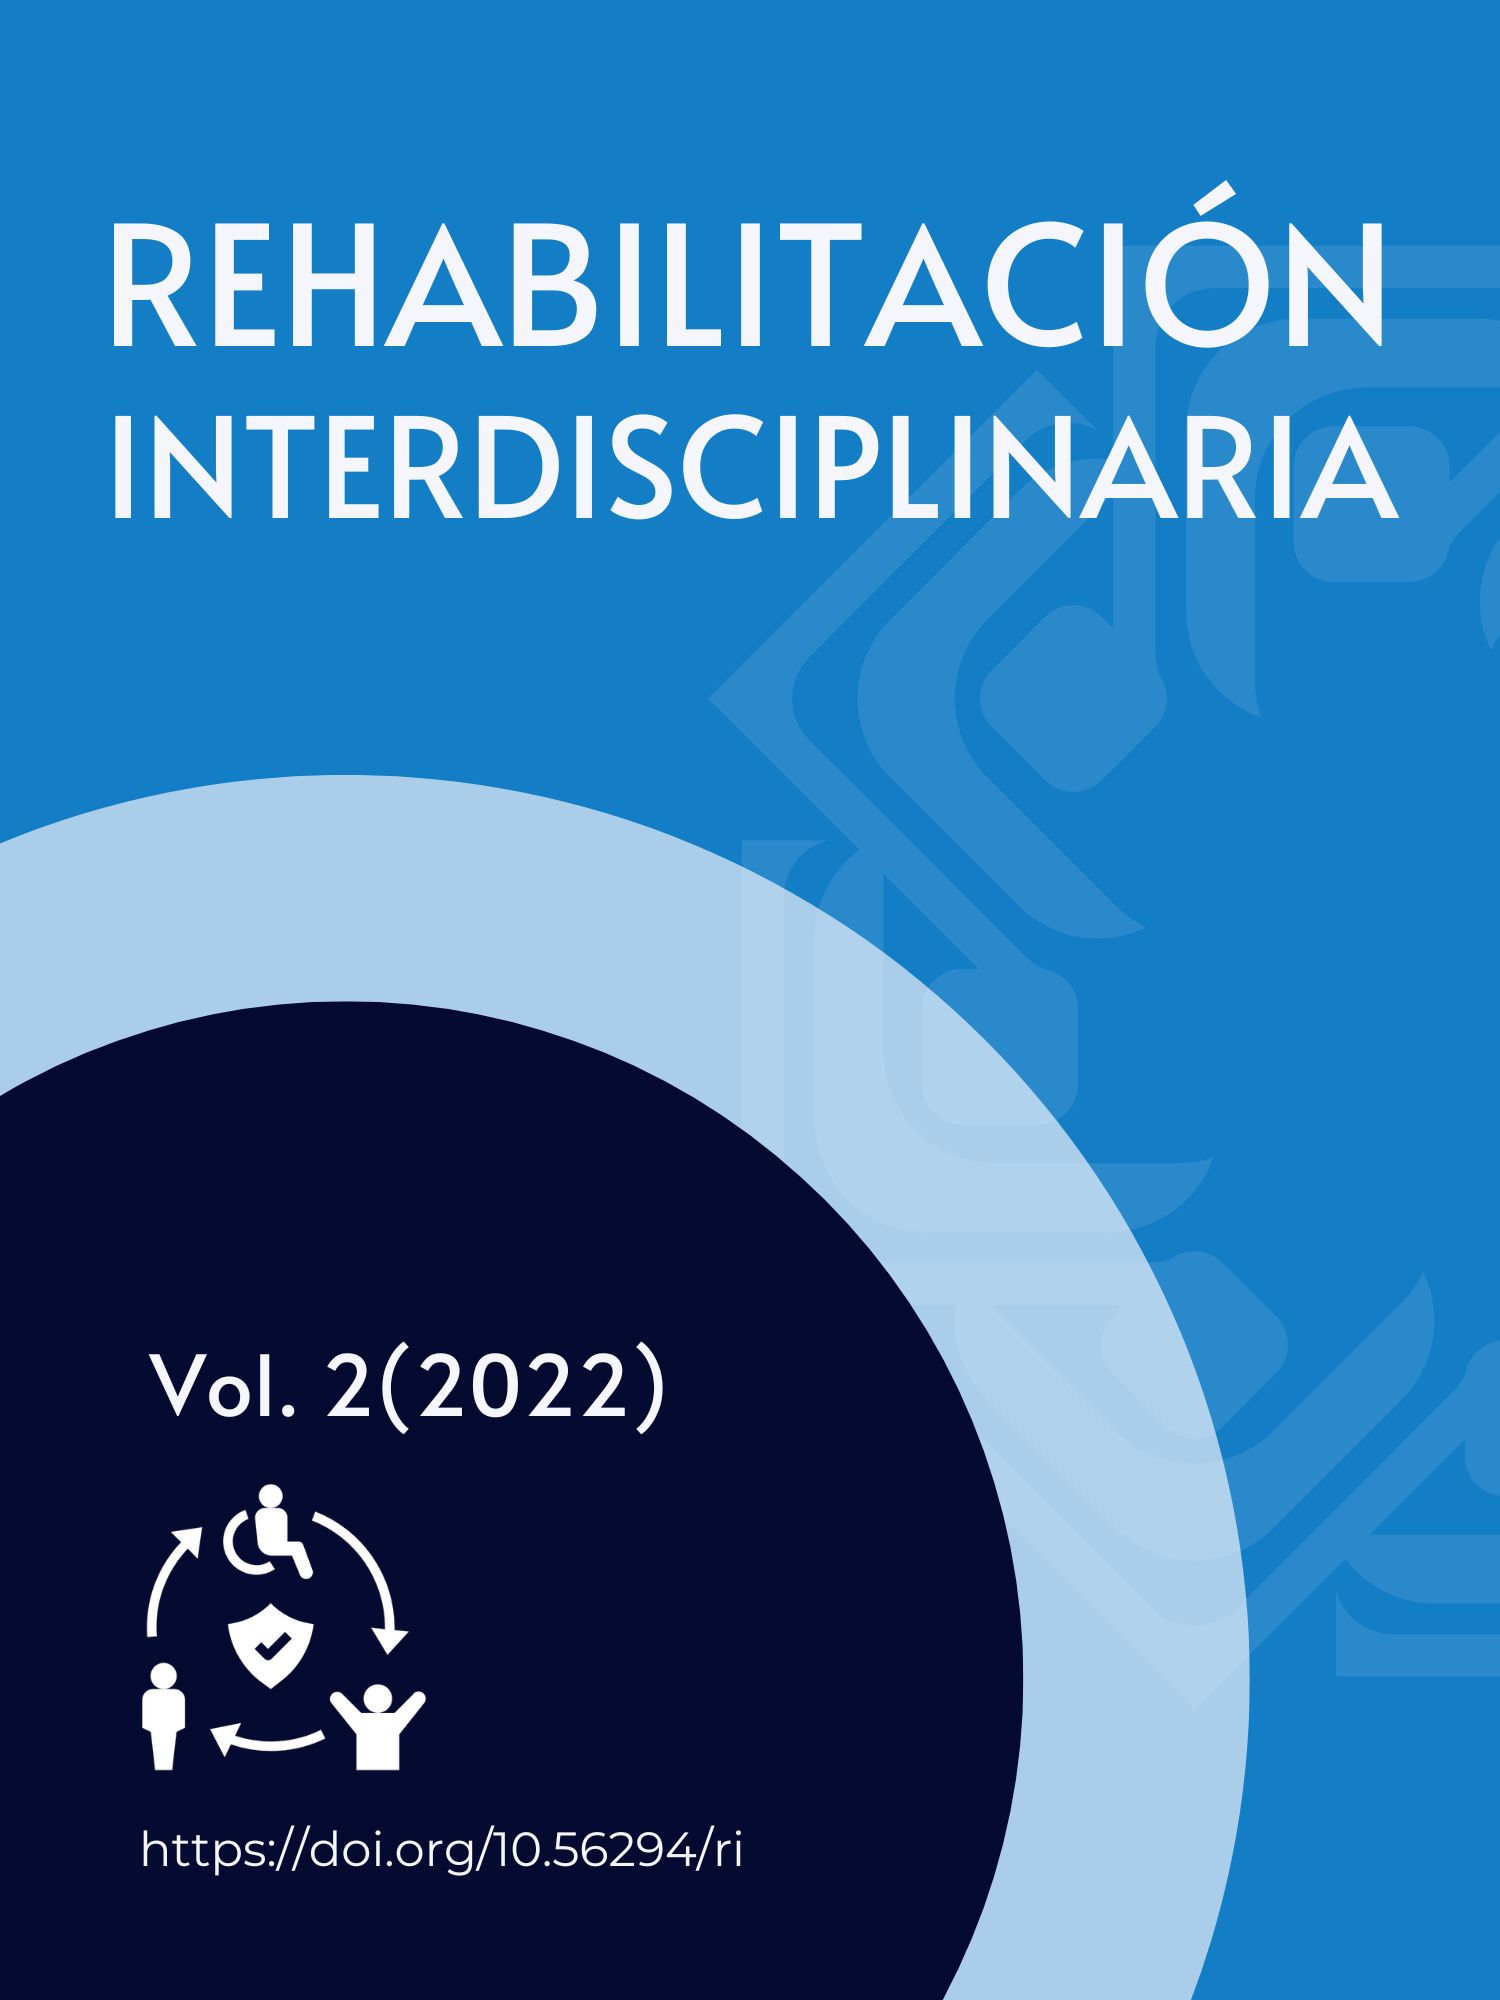 					Ver Vol. 2 (2023): Rehabilitación Interdisciplinaria
				